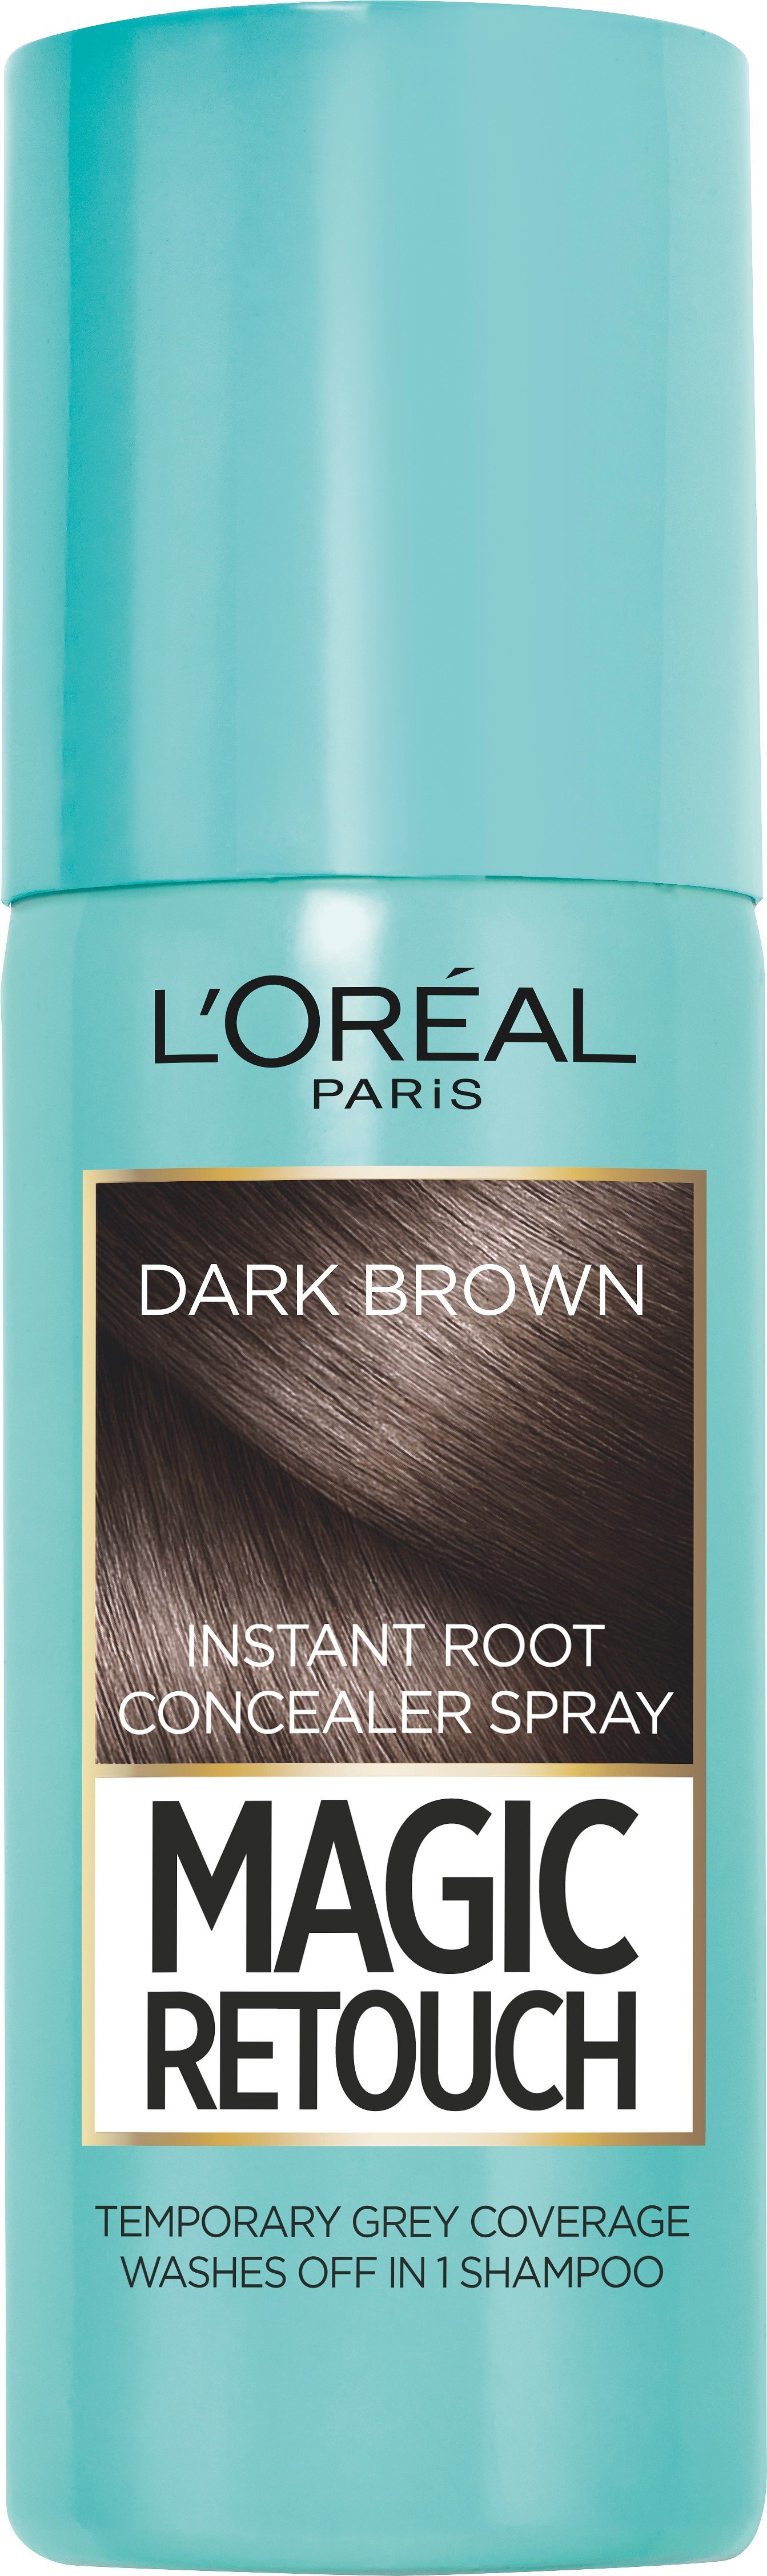 L'Oréal Paris Magic Retouch Concealer Spray Dark Brown 75 ml